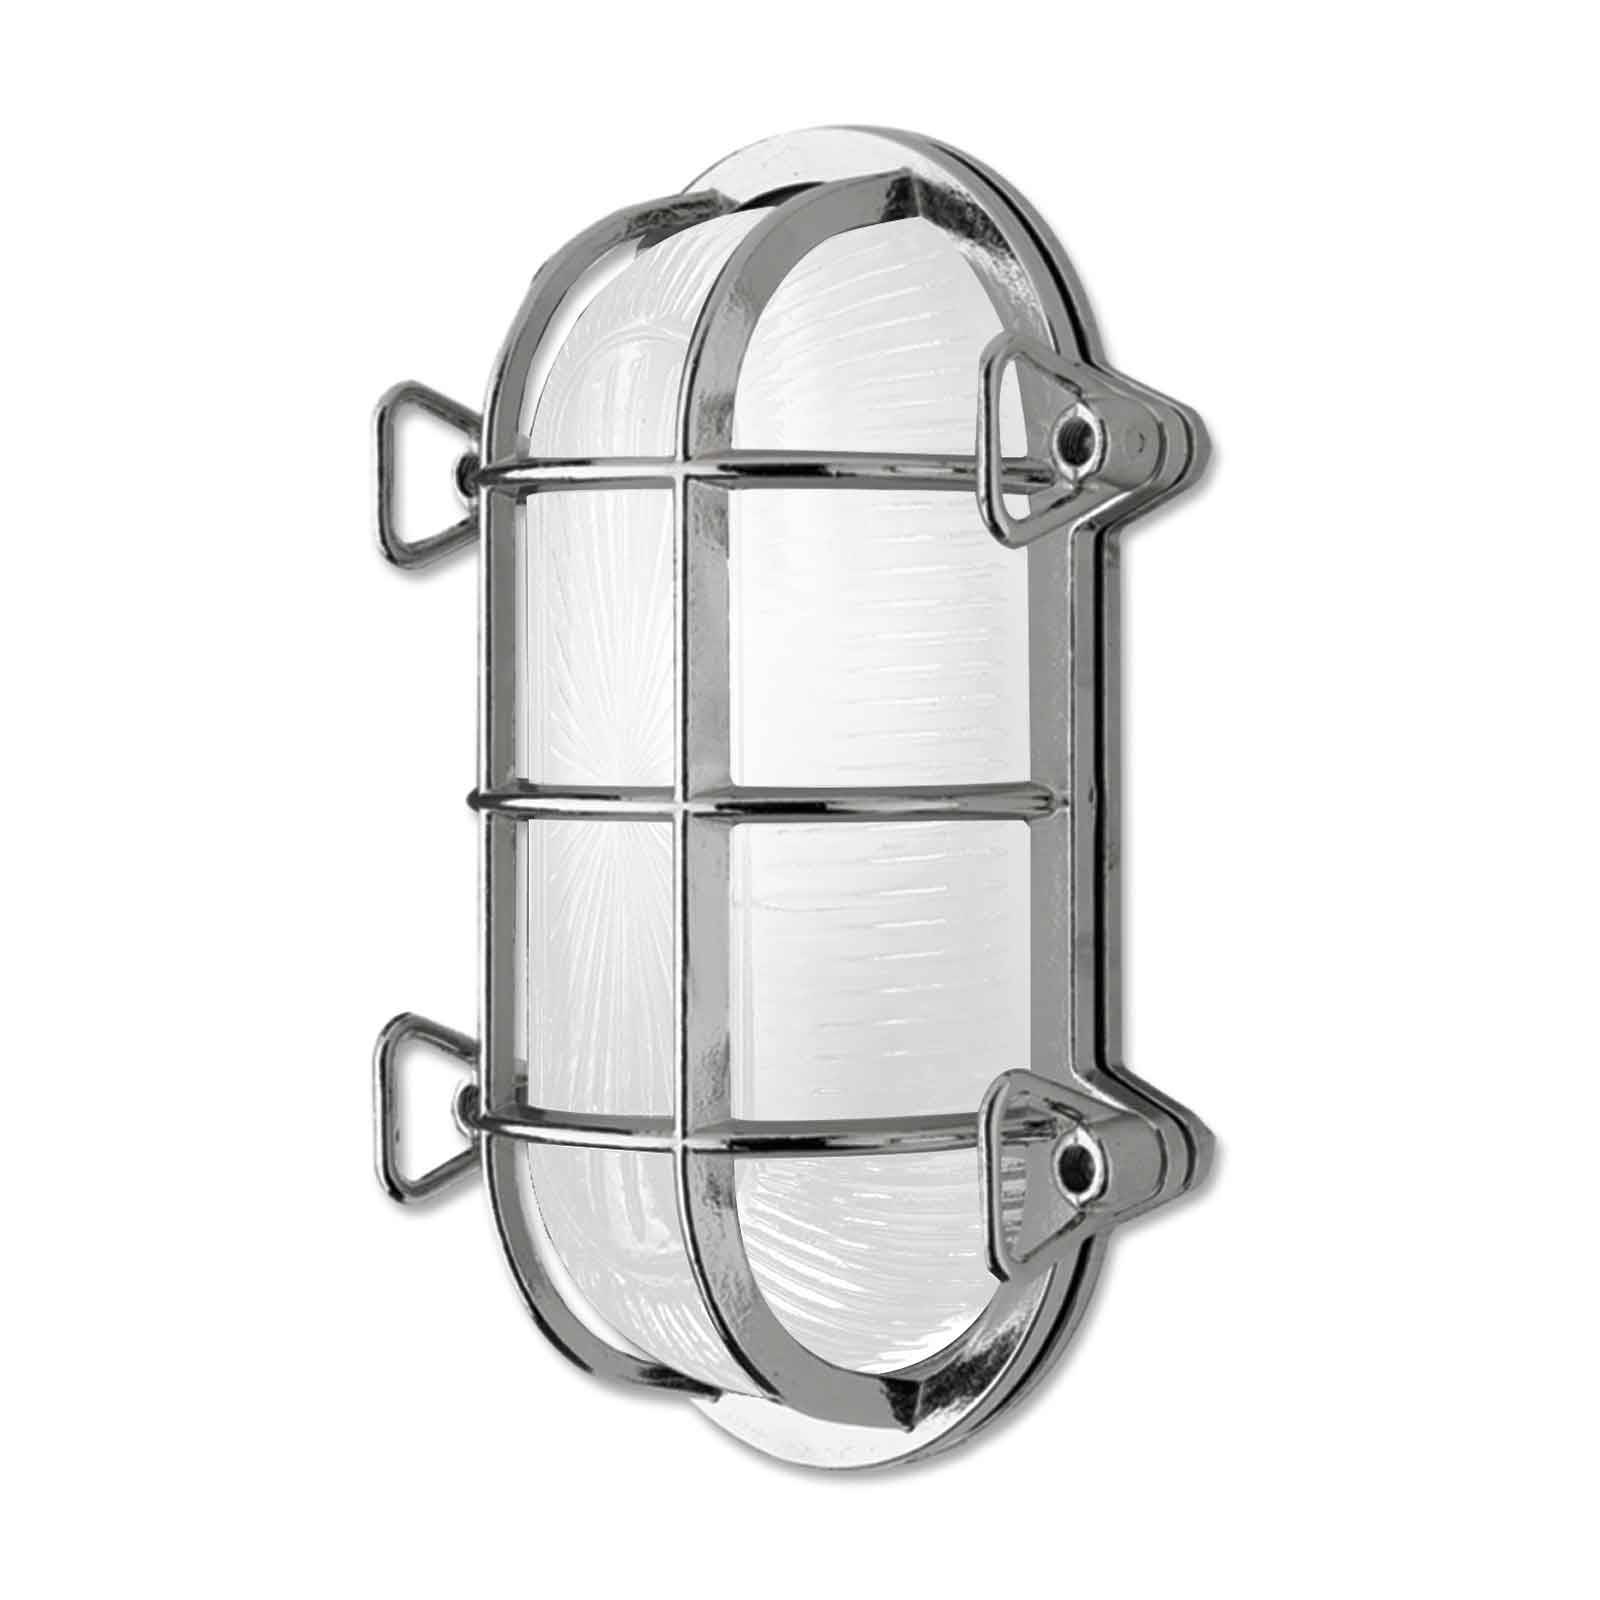 Moretti luce tortuga 200.21, ovális, nikkel/opál fali lámpa